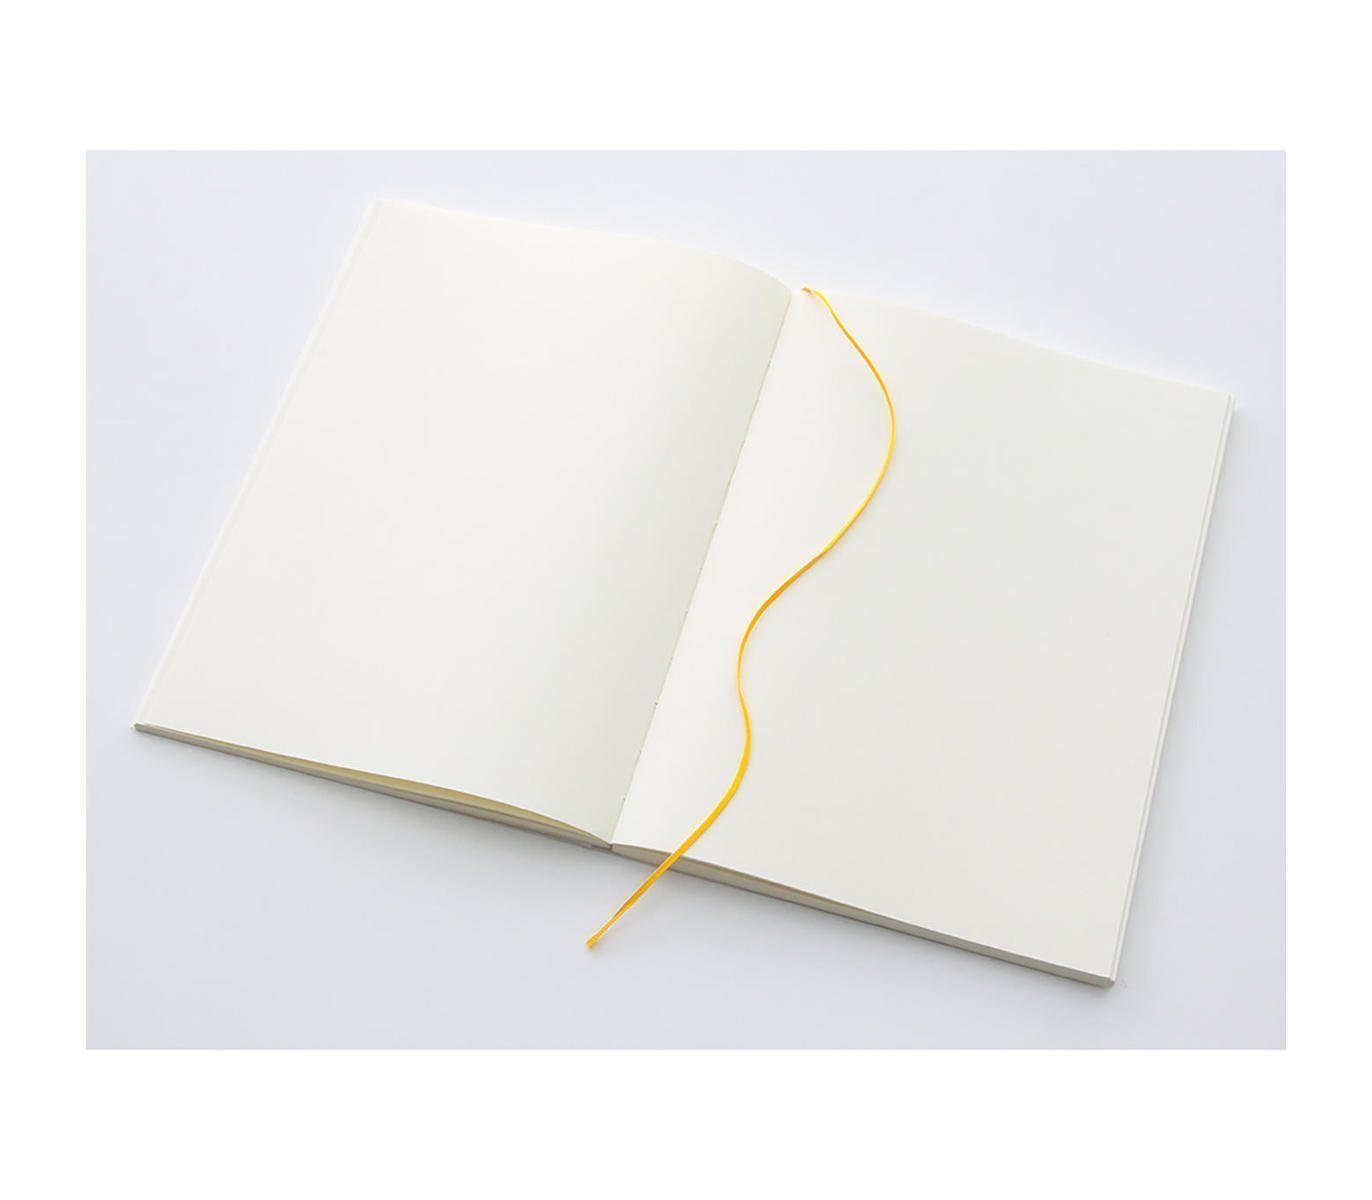 Plain Paper Notebook - Blank Journal for Creative Minds | Corkor - A4